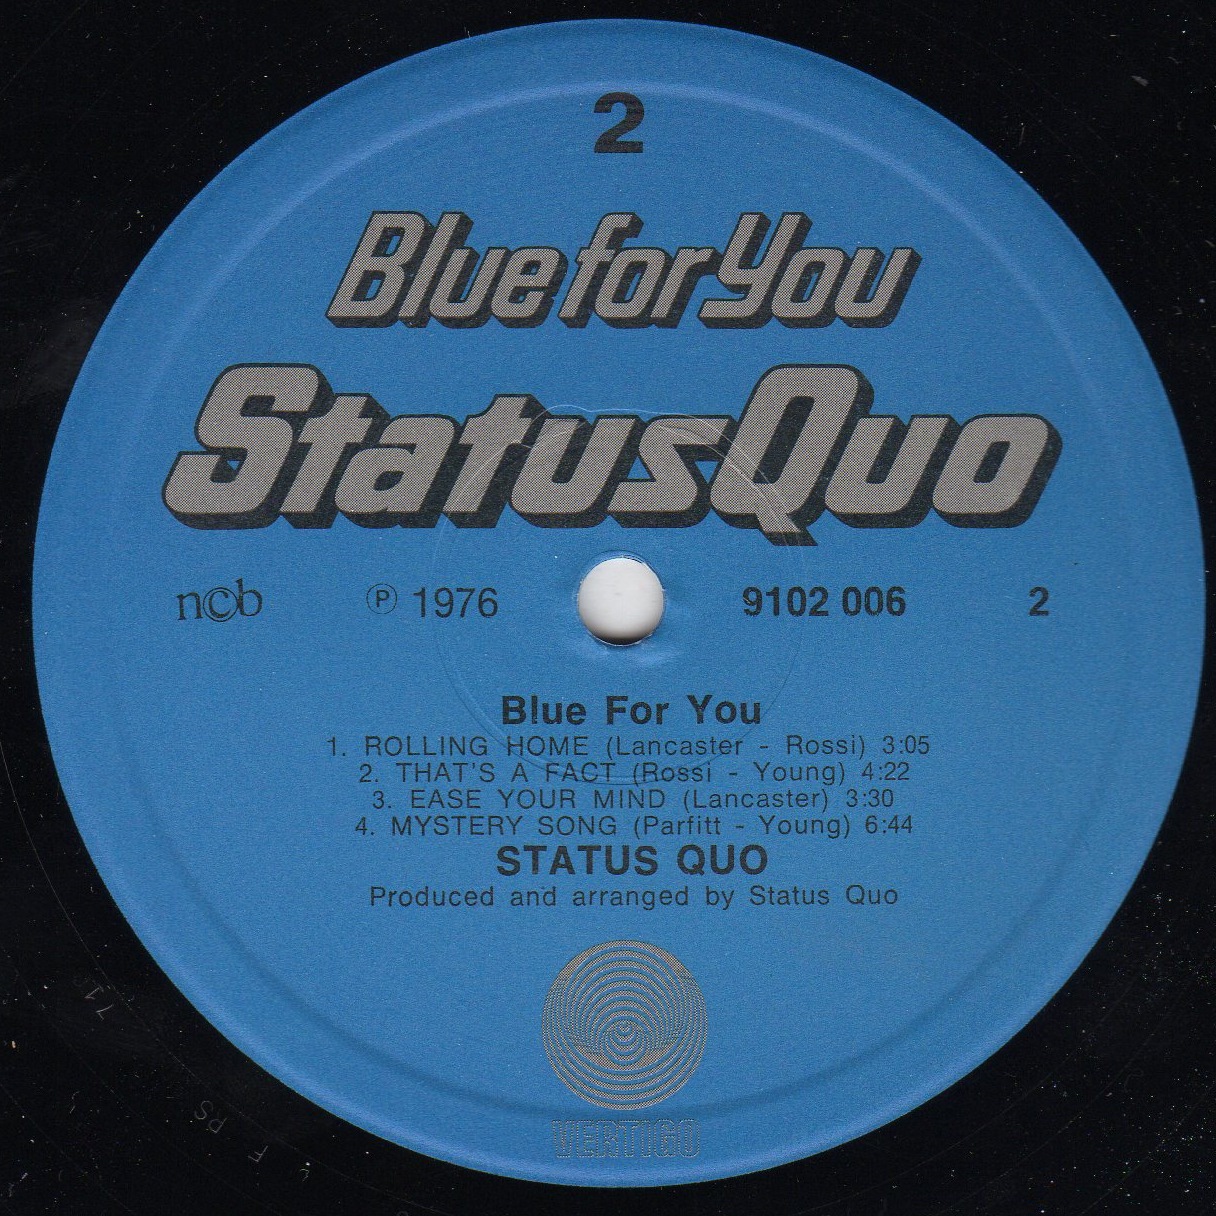 Статус кво mp3 все песни. Blue for you status Quo. Status Quo for you. Пенсильвания блюз статус кво. Status Quo Blue for you 1976.